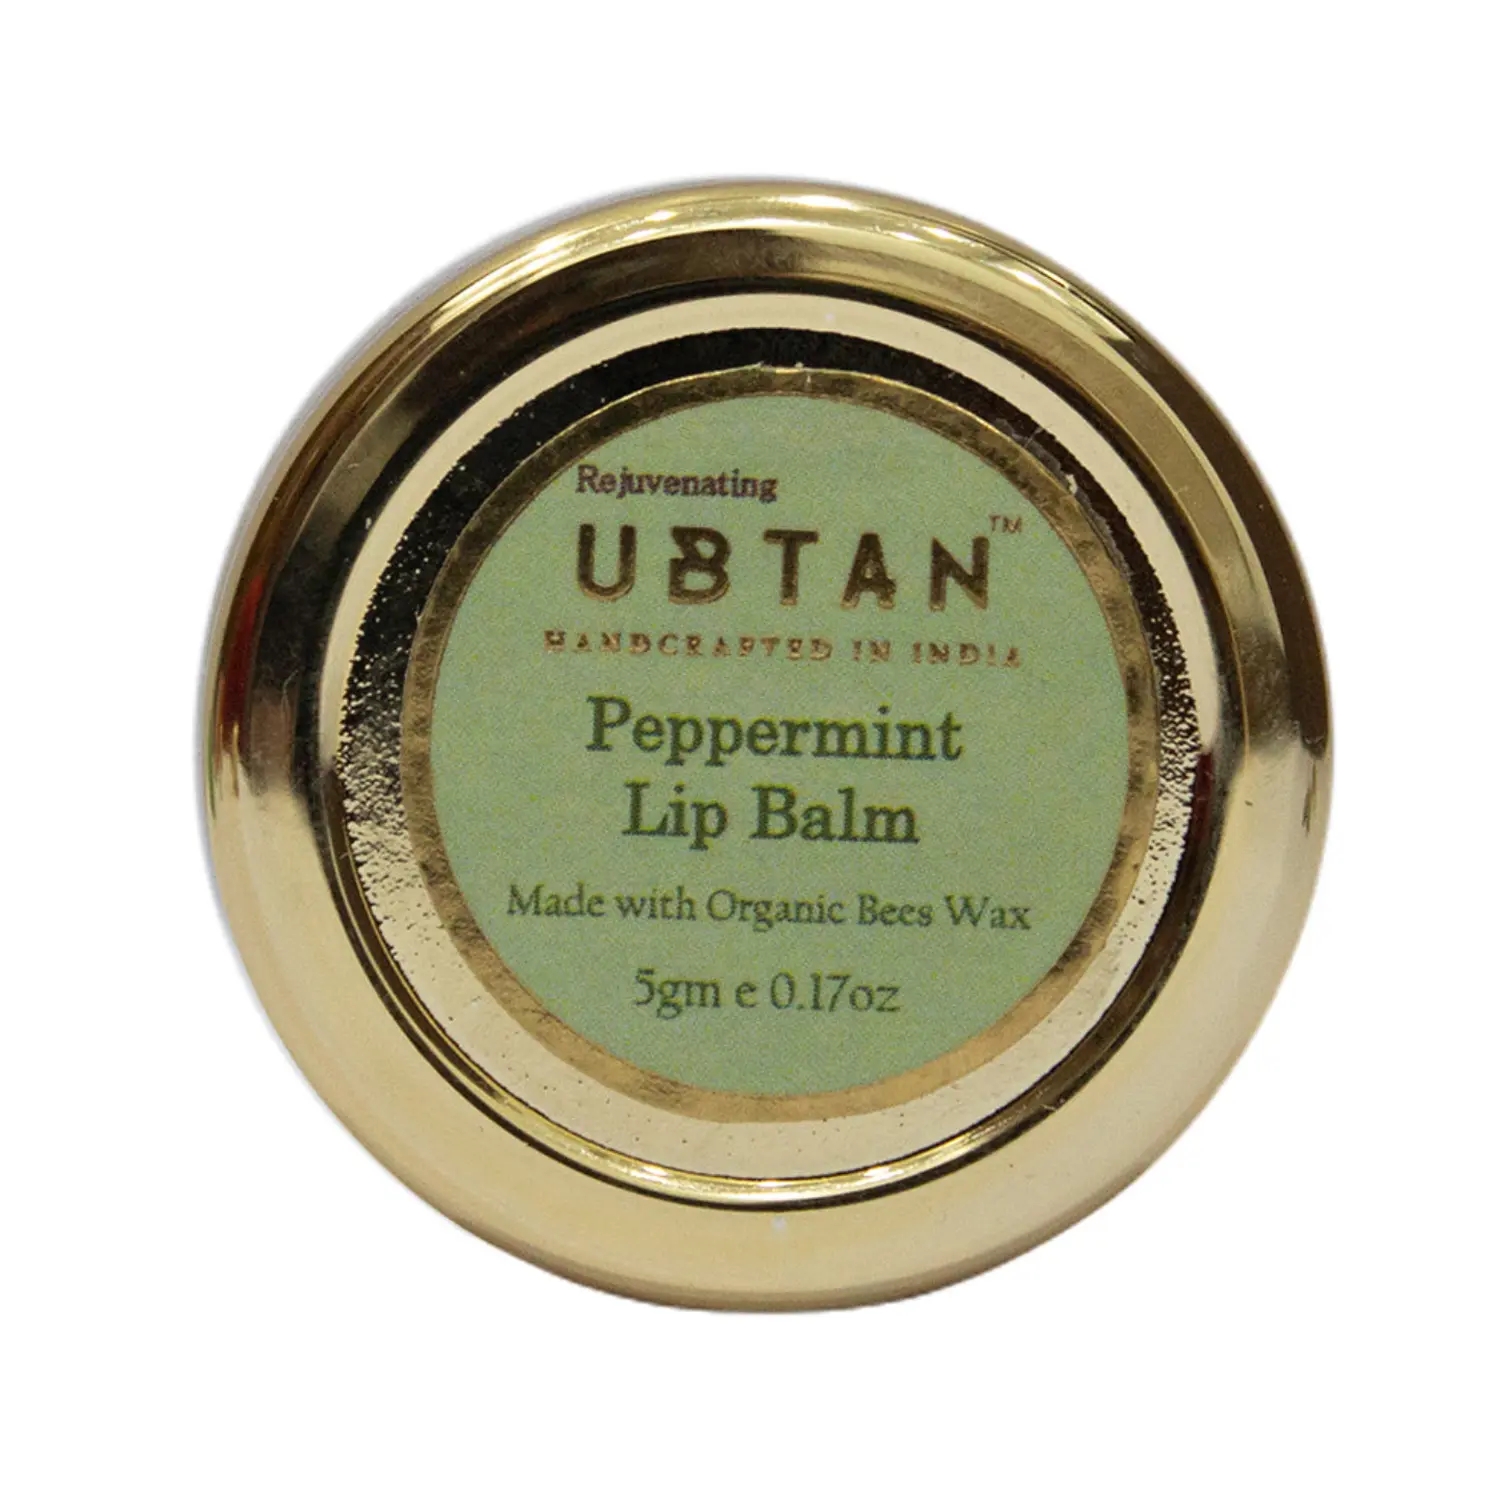 Rejuvenating UBTAN | Rejuvenating UBTAN Peppermint Lip Balm (5g)